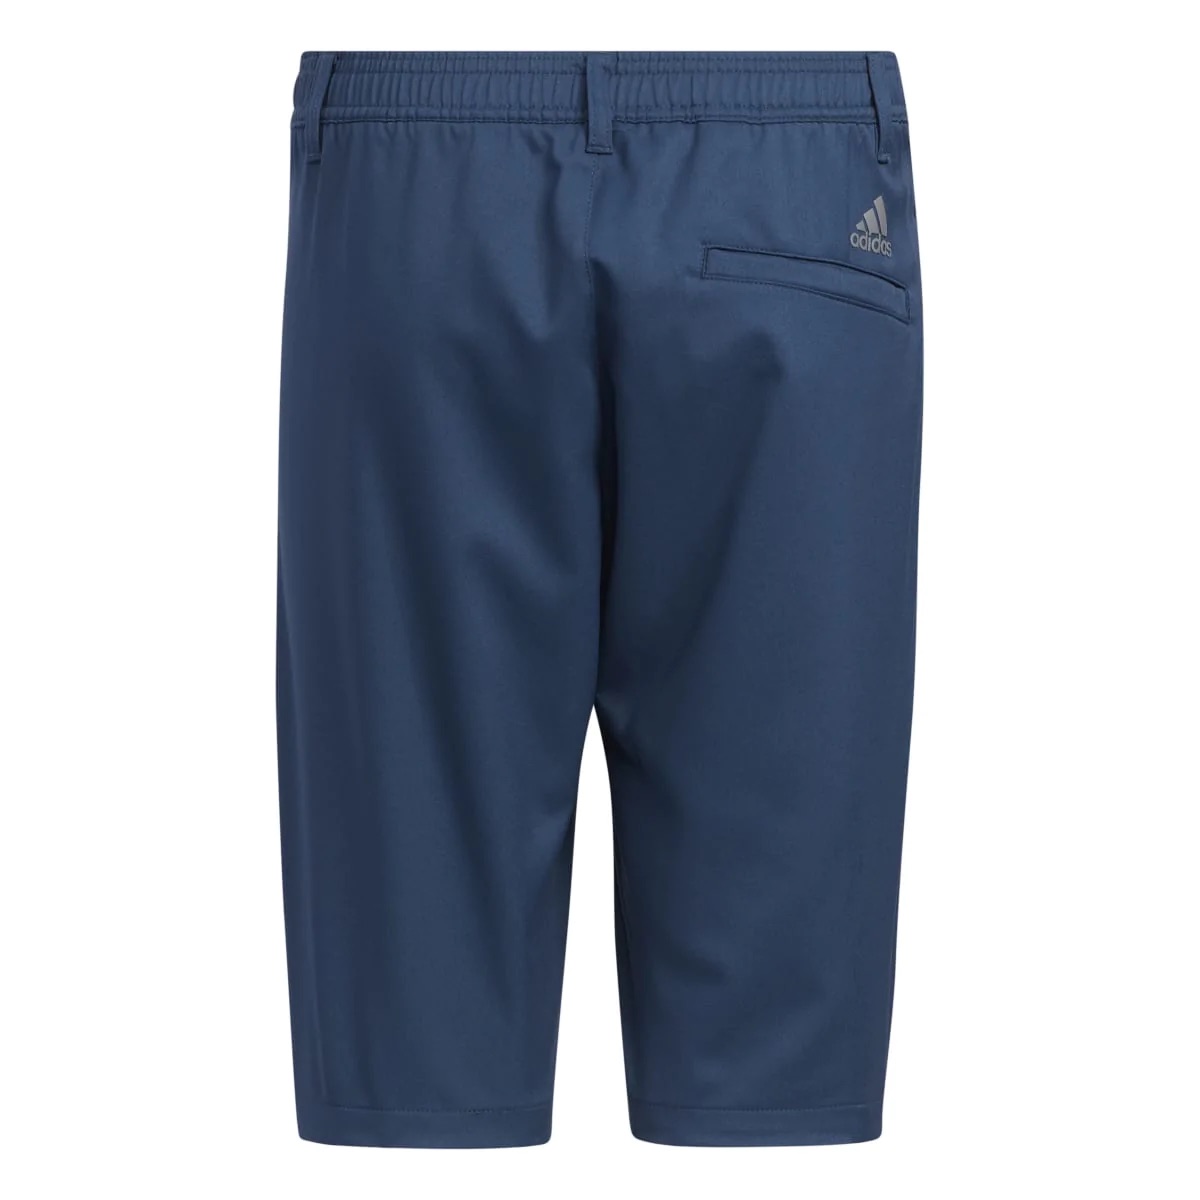 Adidas Boys Ultimate365 Shorts Navy